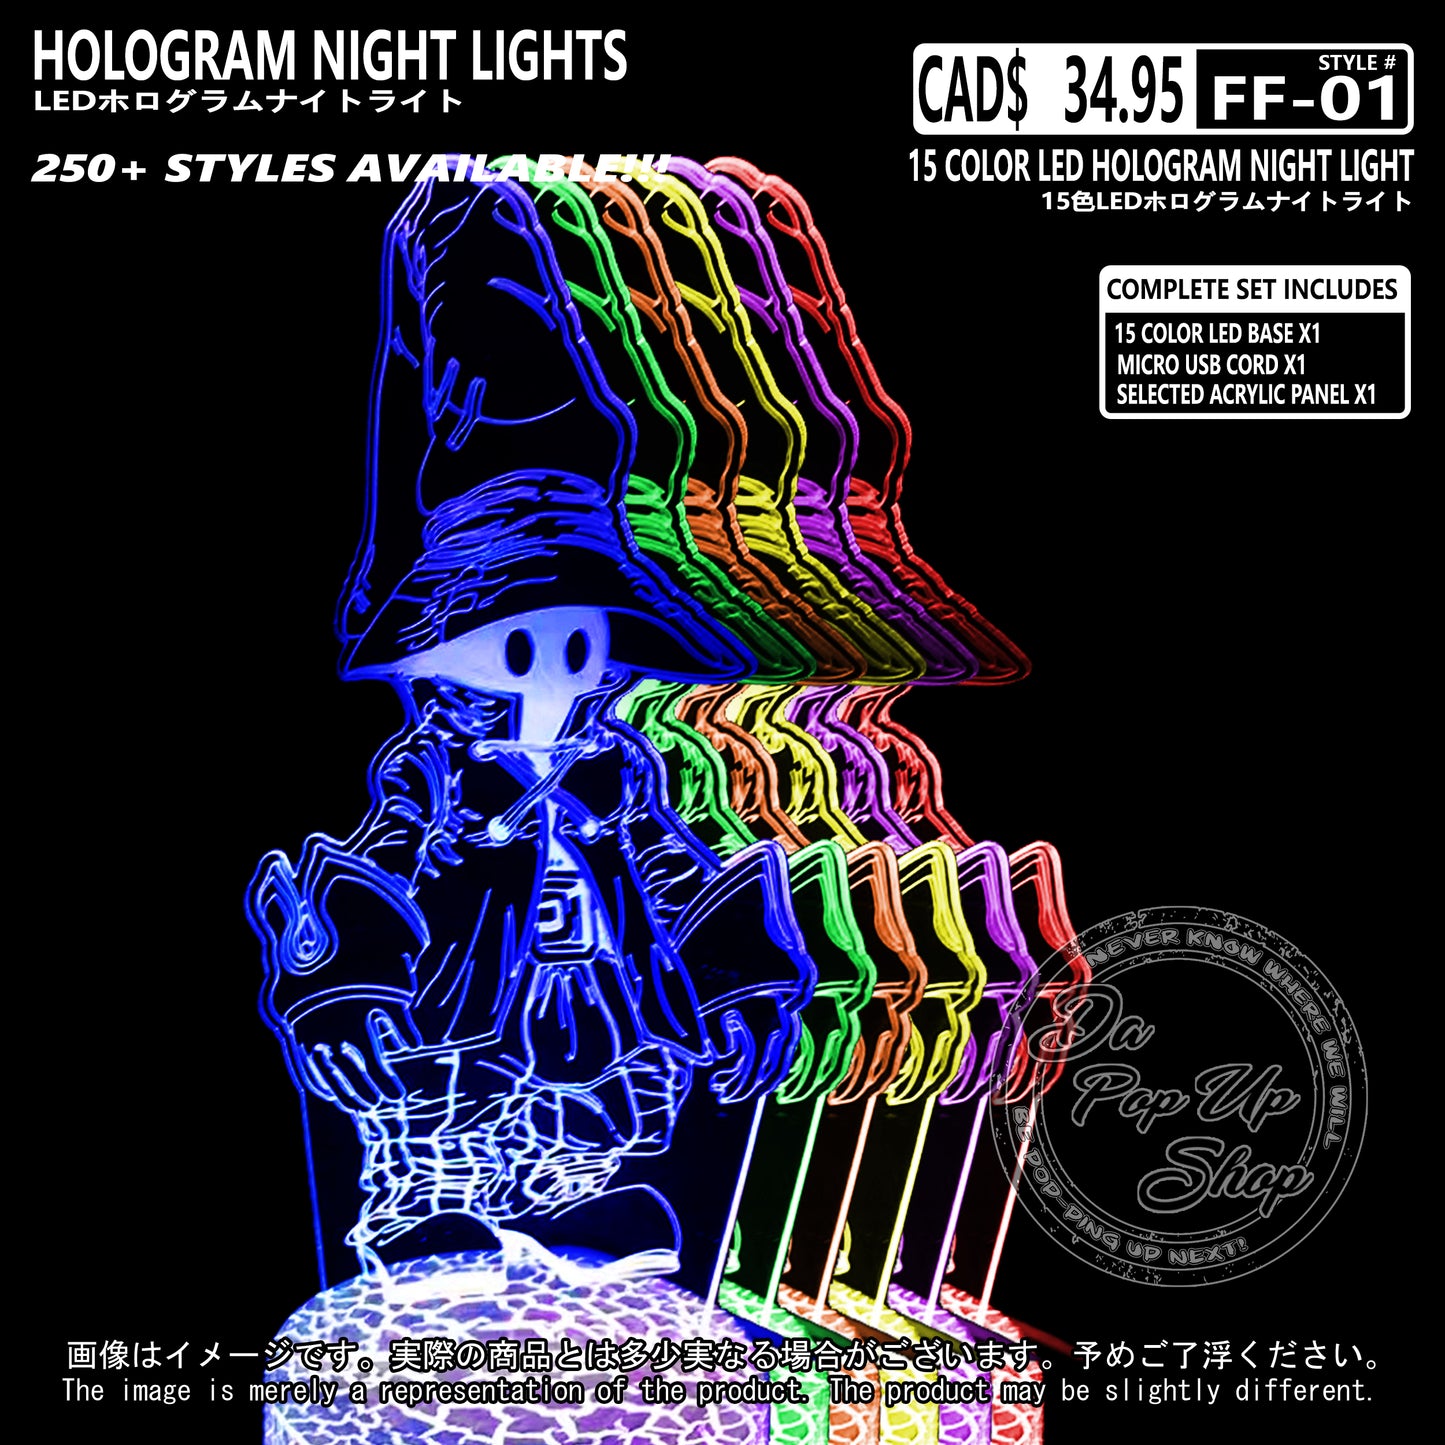 (FF-01) Final Fantasy Hologram LED Night Light